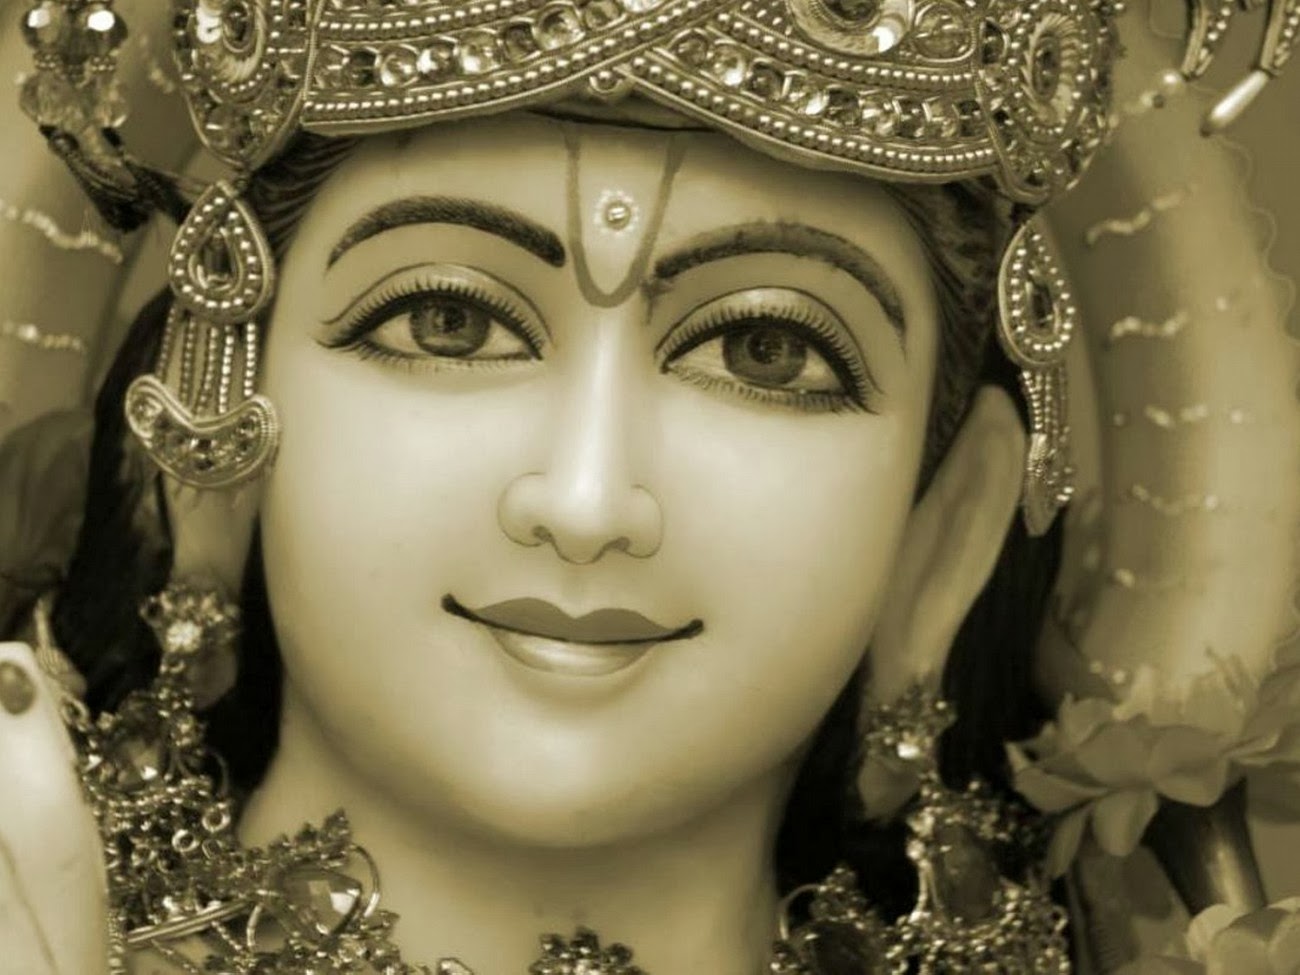 mahabharat star plus hd wallpaper,beauty,close up,headpiece,forehead,eye